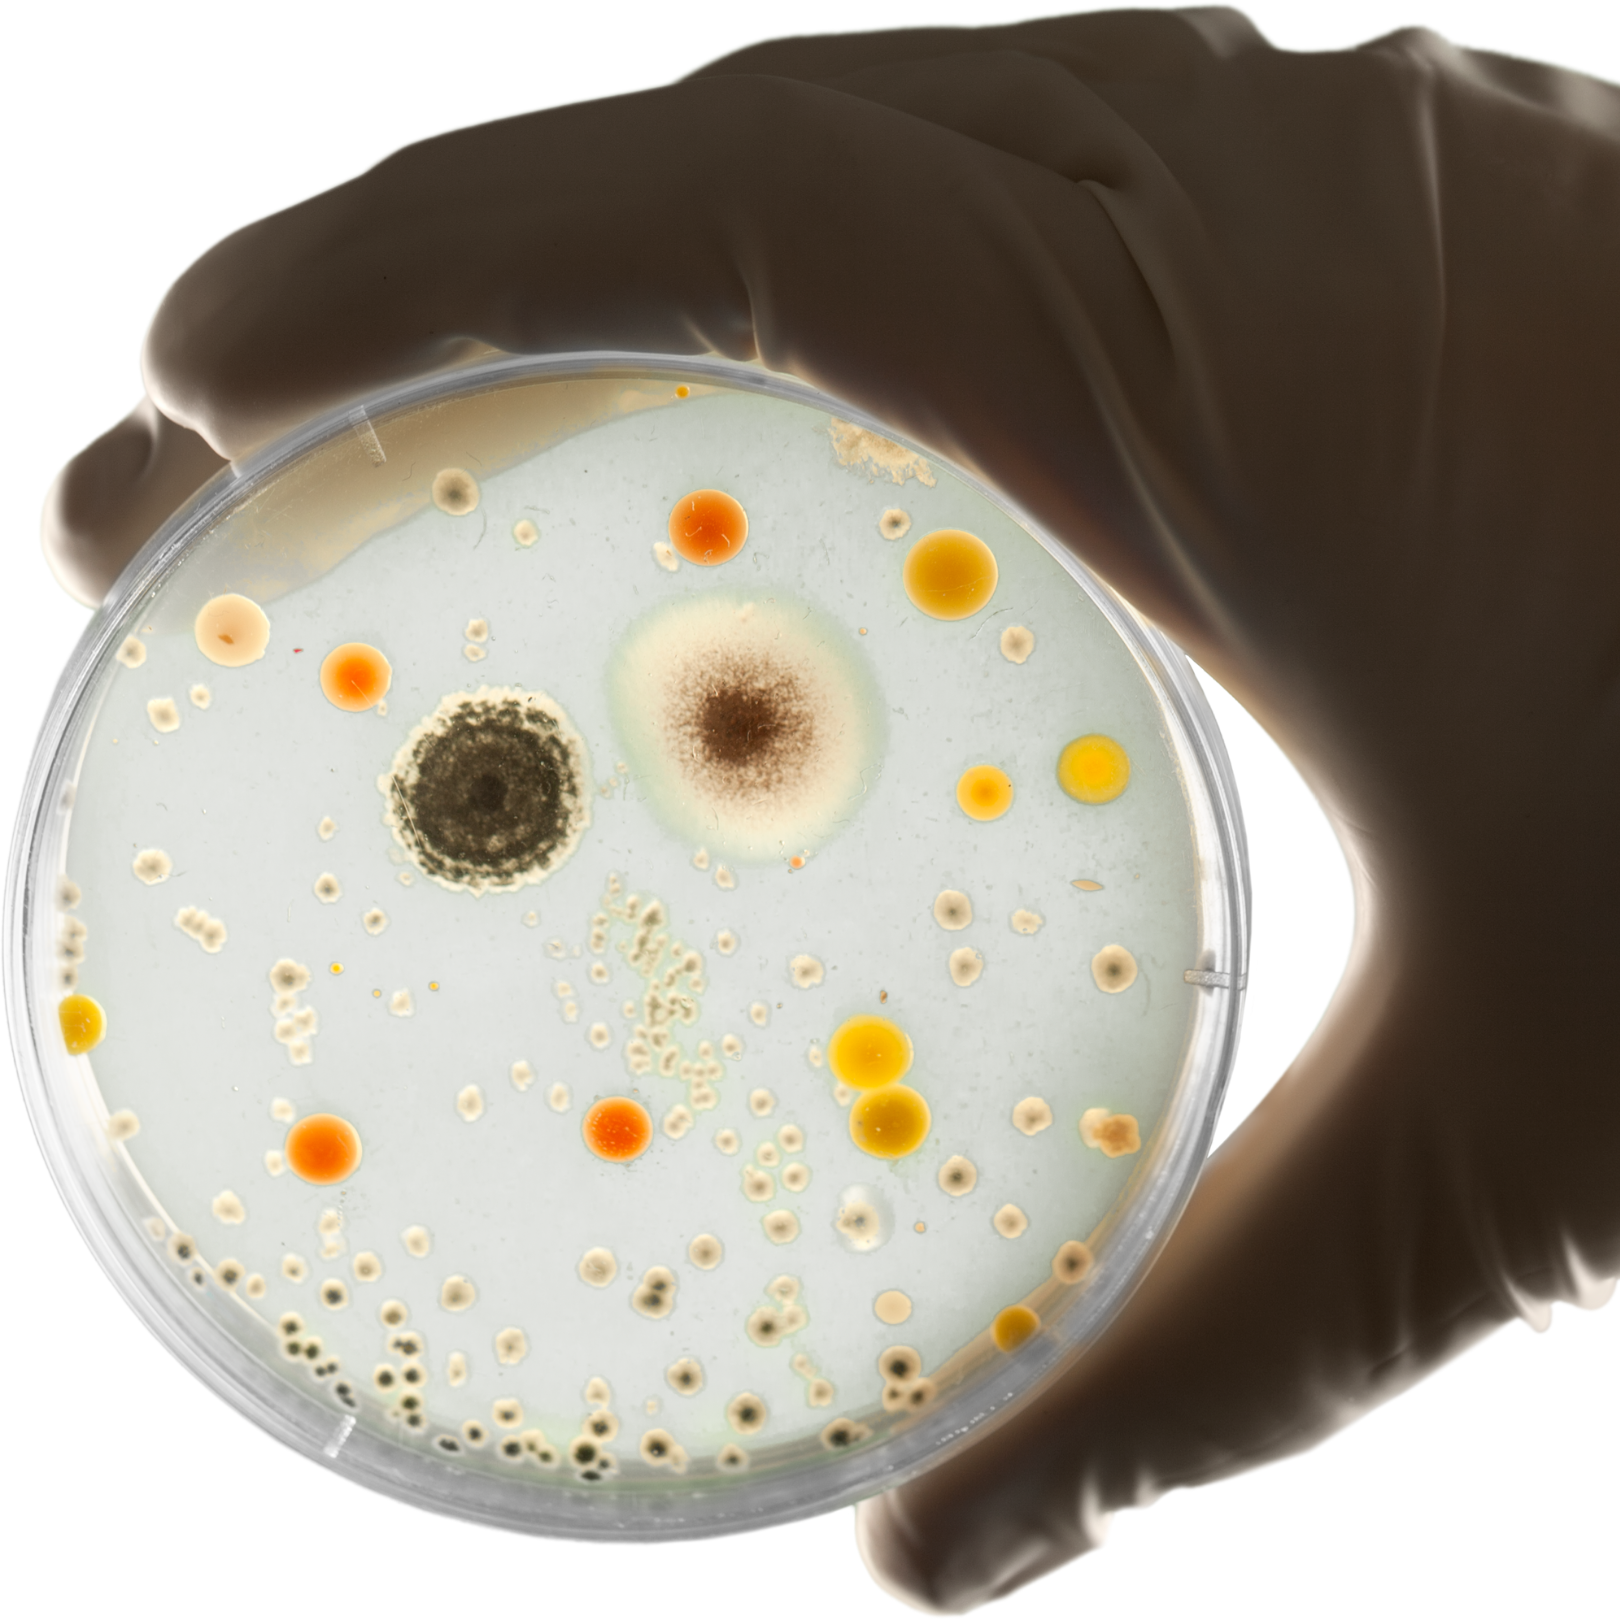 Agar plate with bacteria